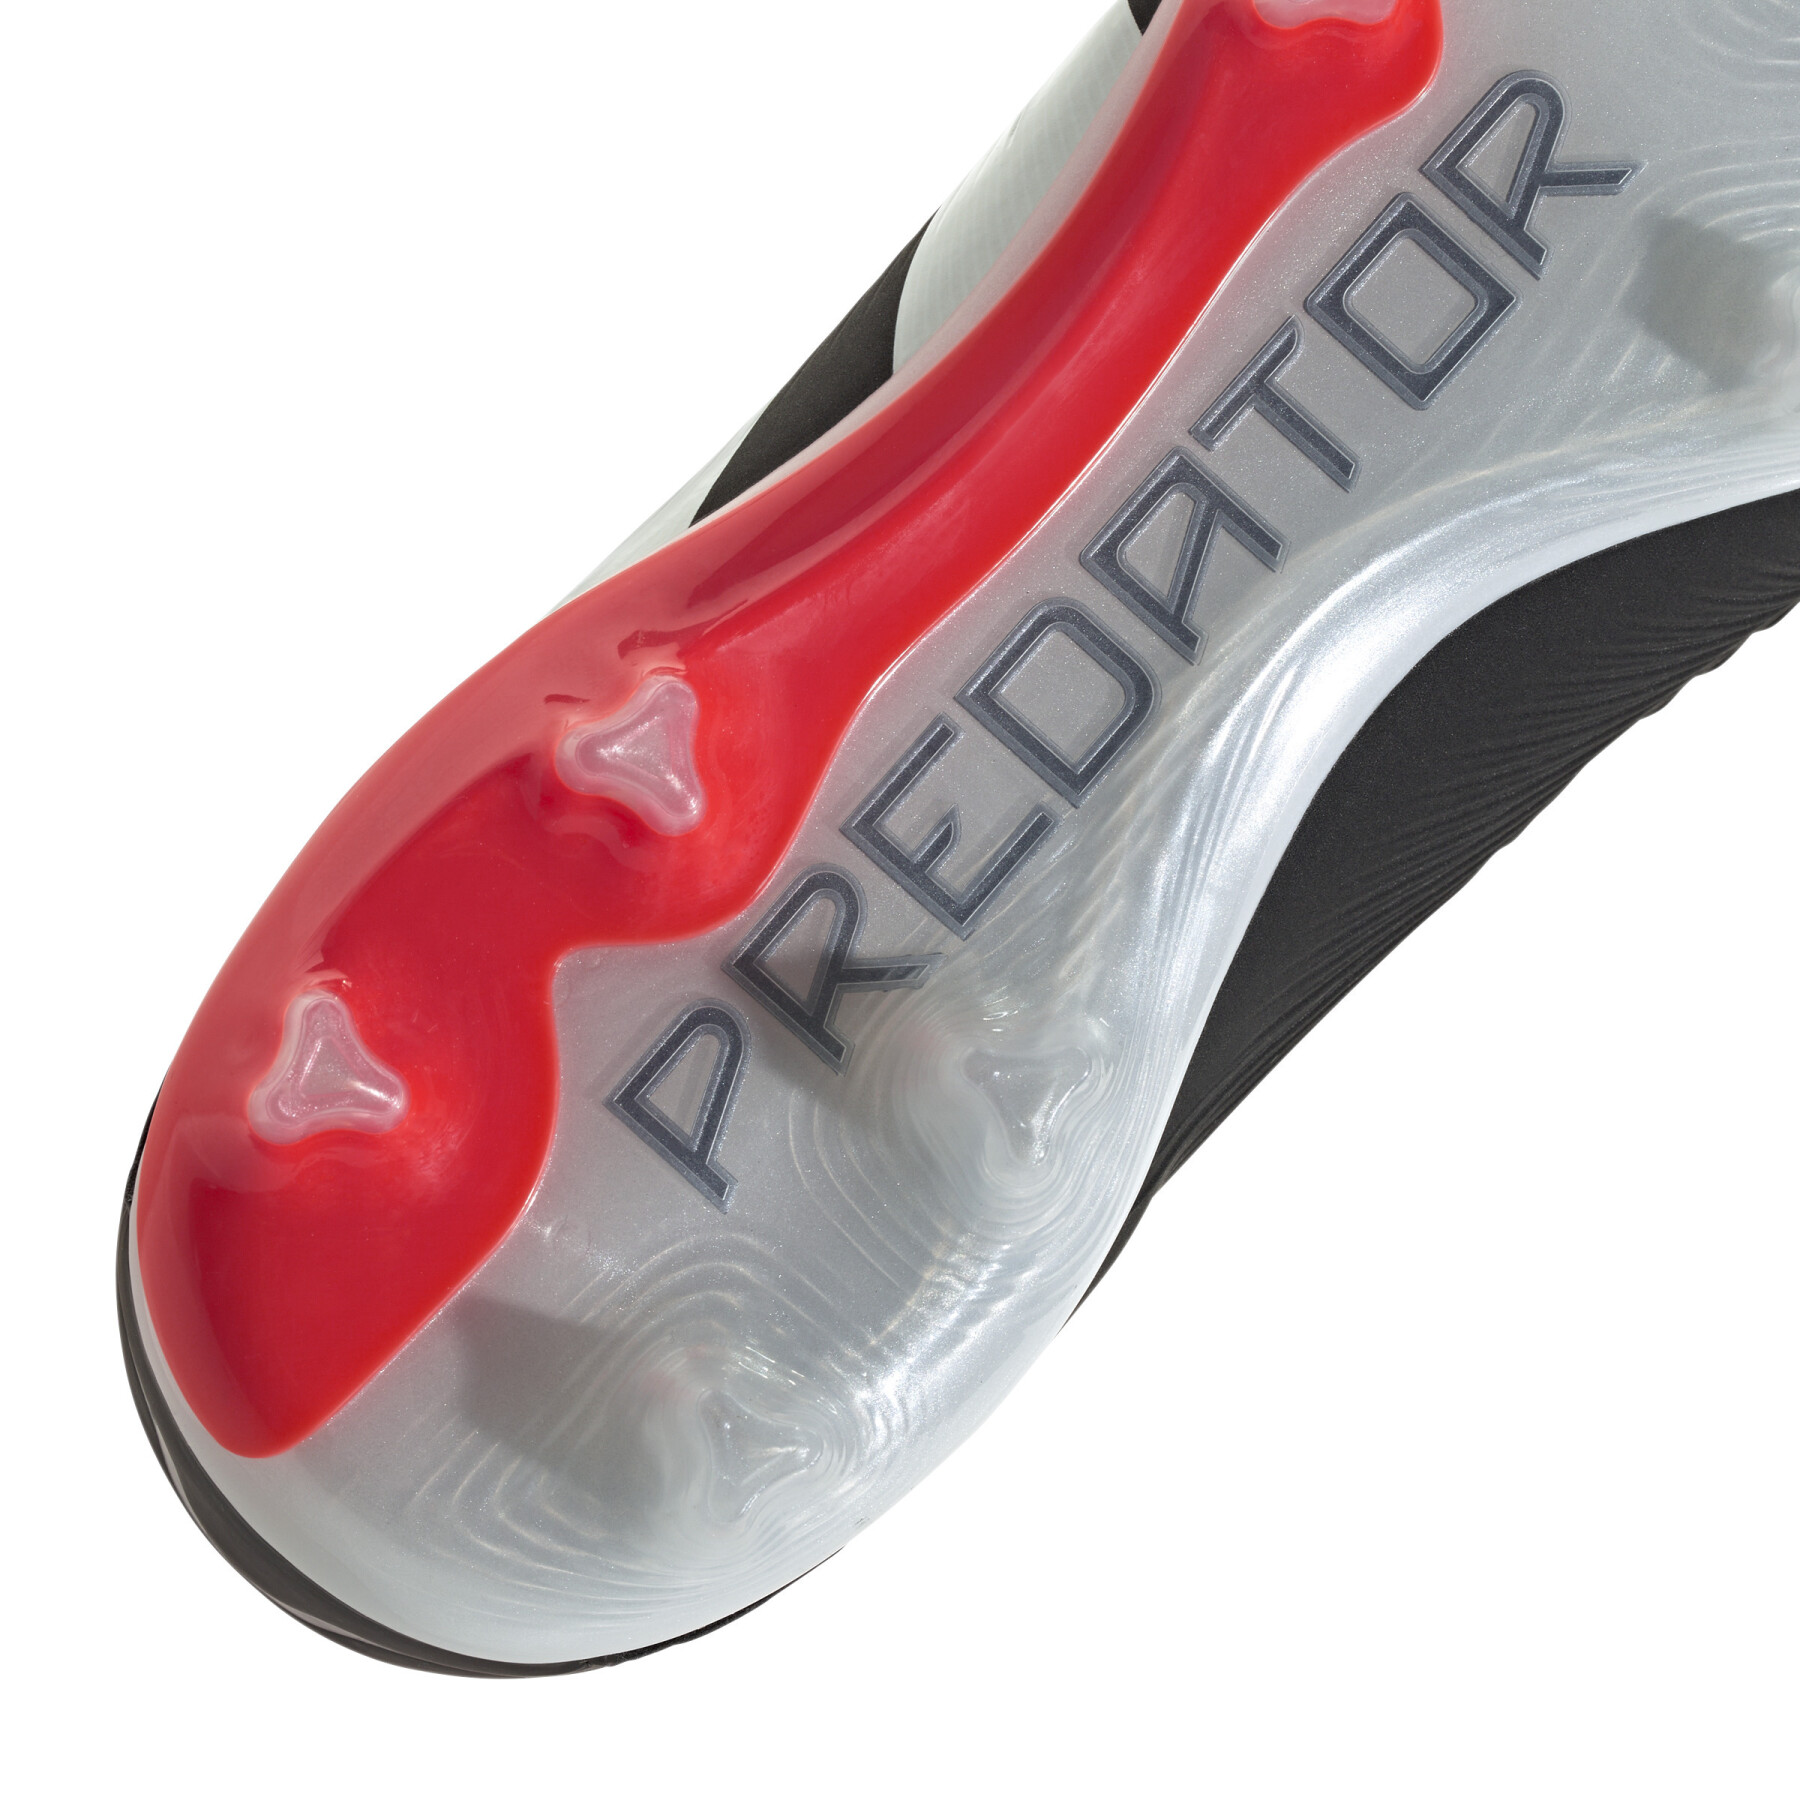 Botas de fútbol adidas Predator Pro FG